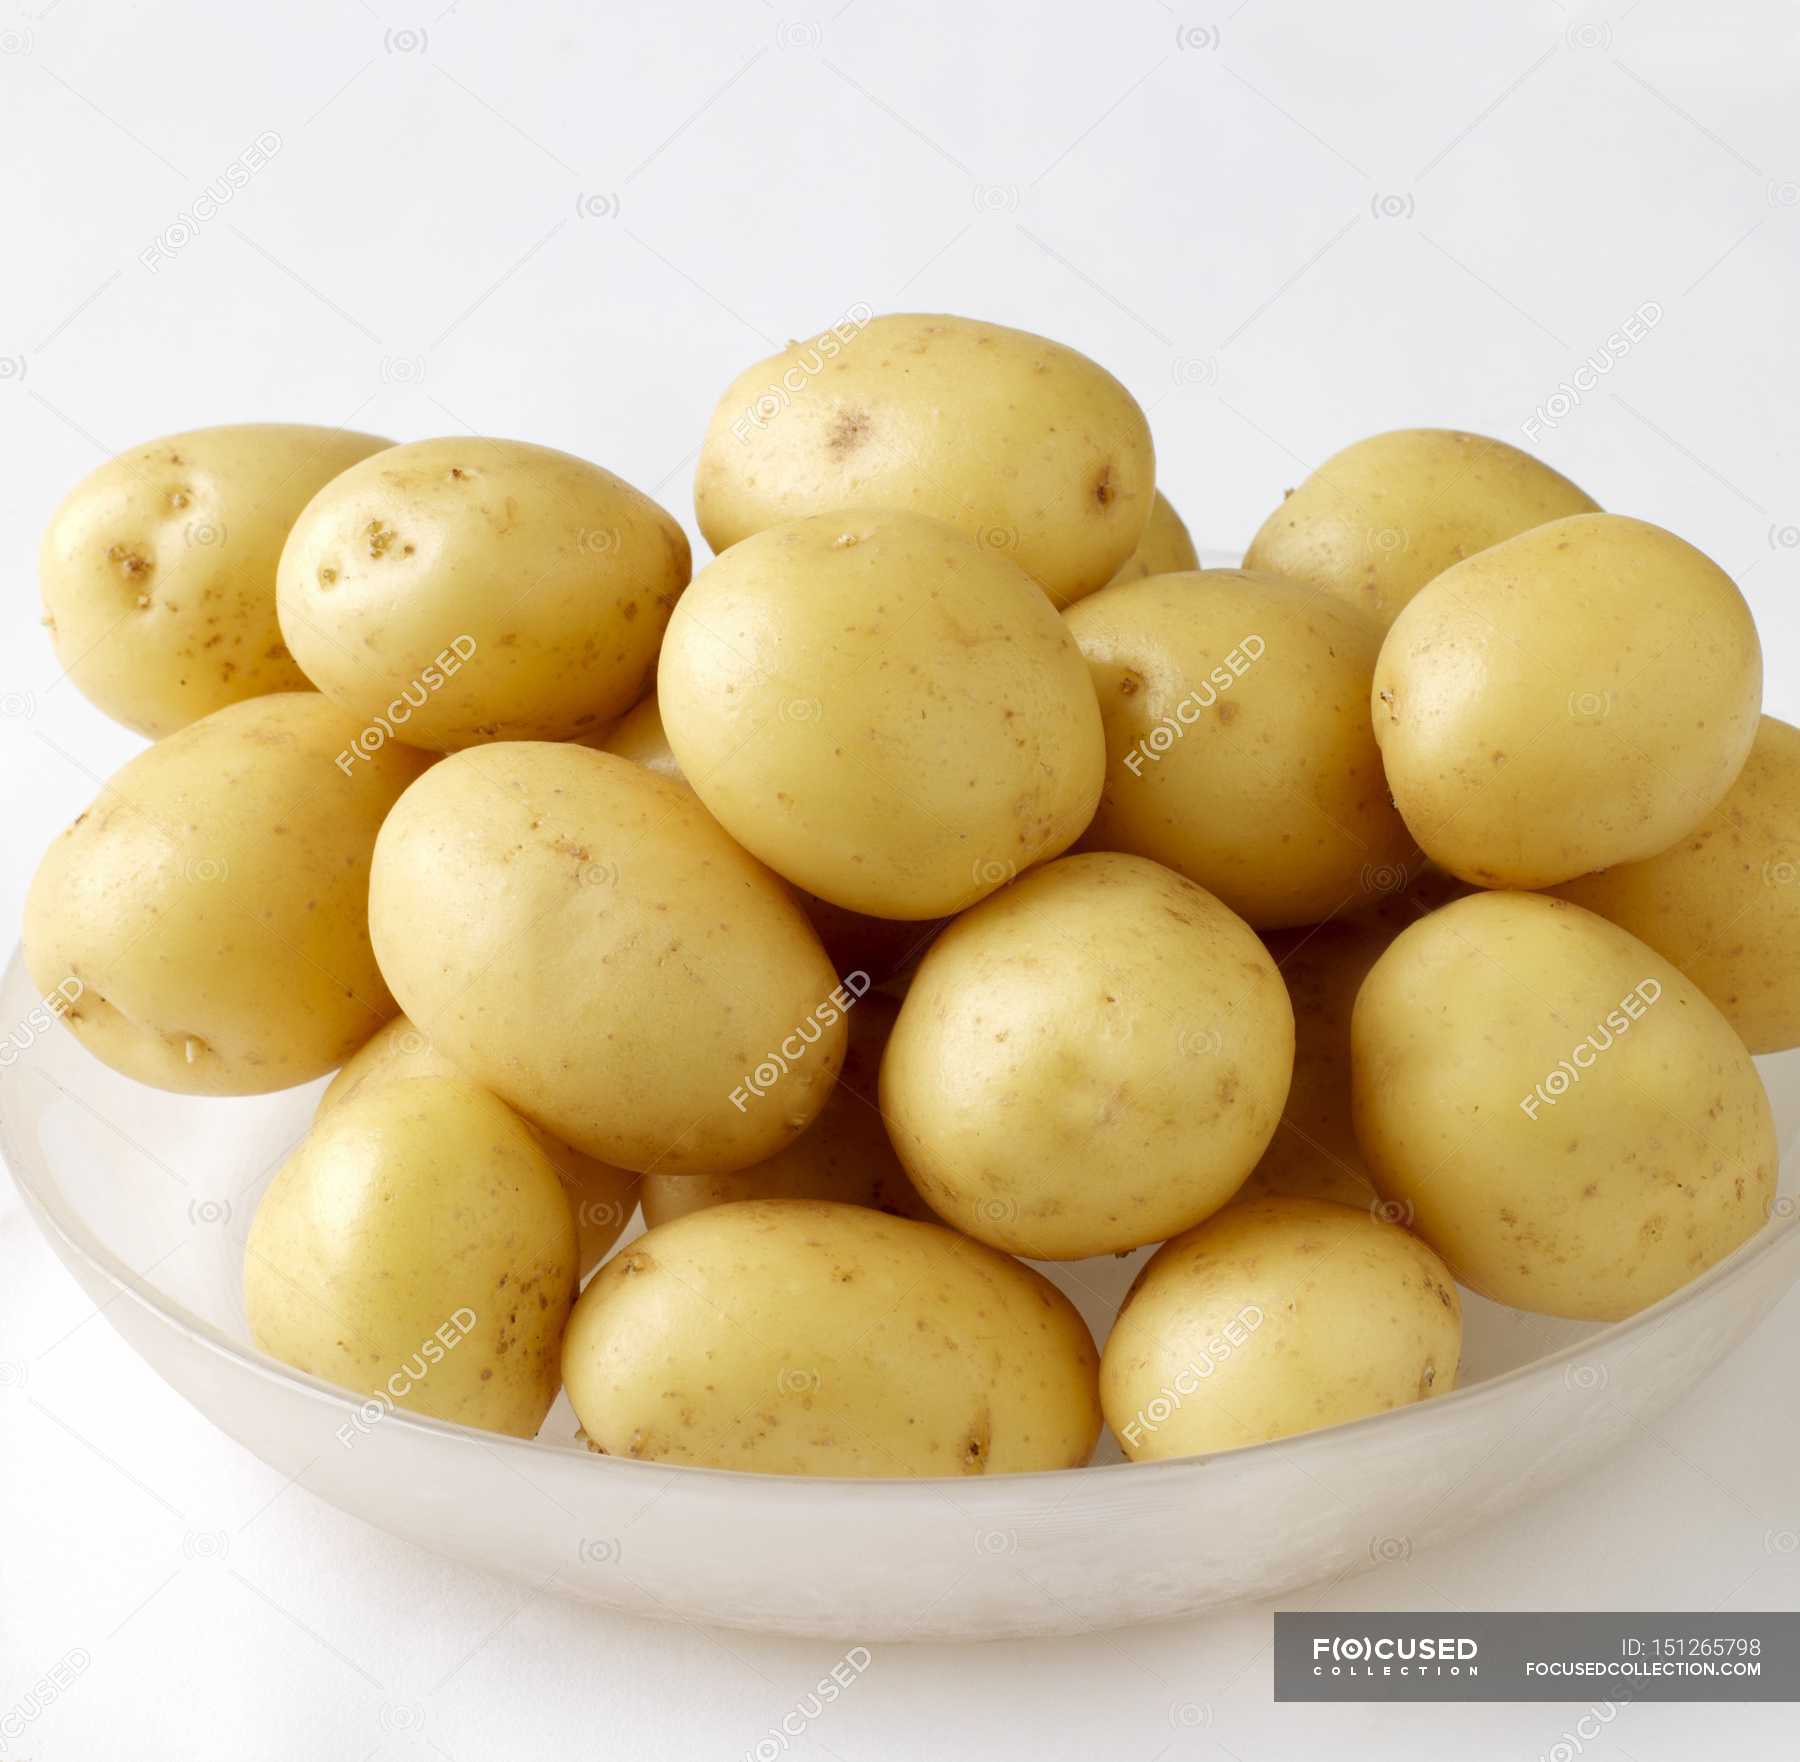 Bowl of fresh potatoes — Stock Photo | #151265798